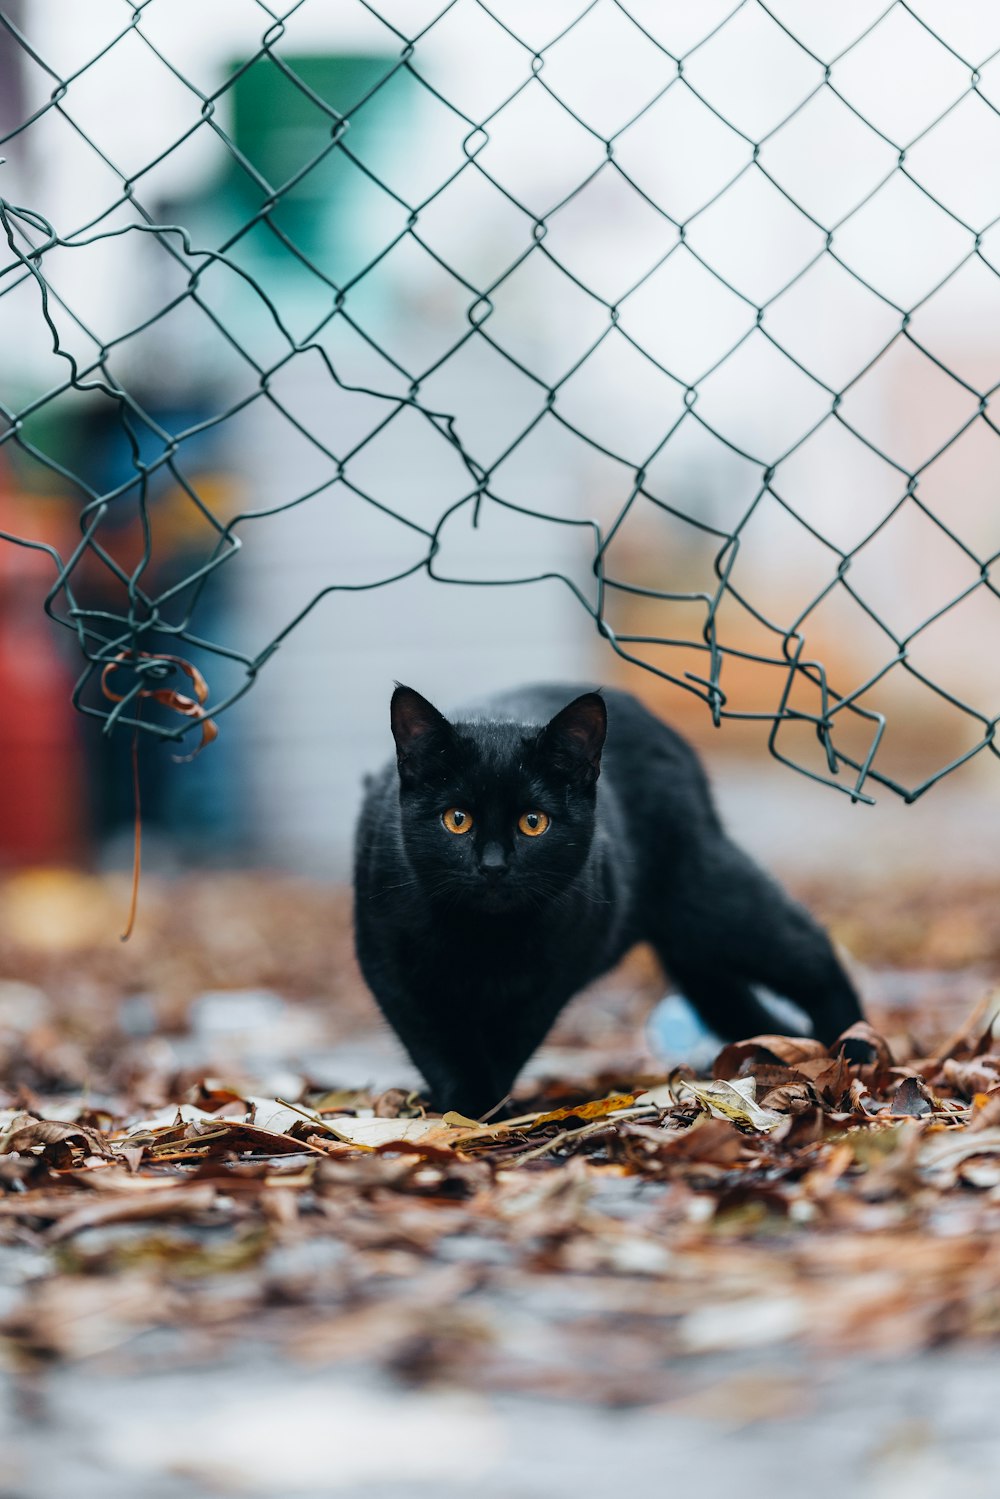 a black cat in a cage